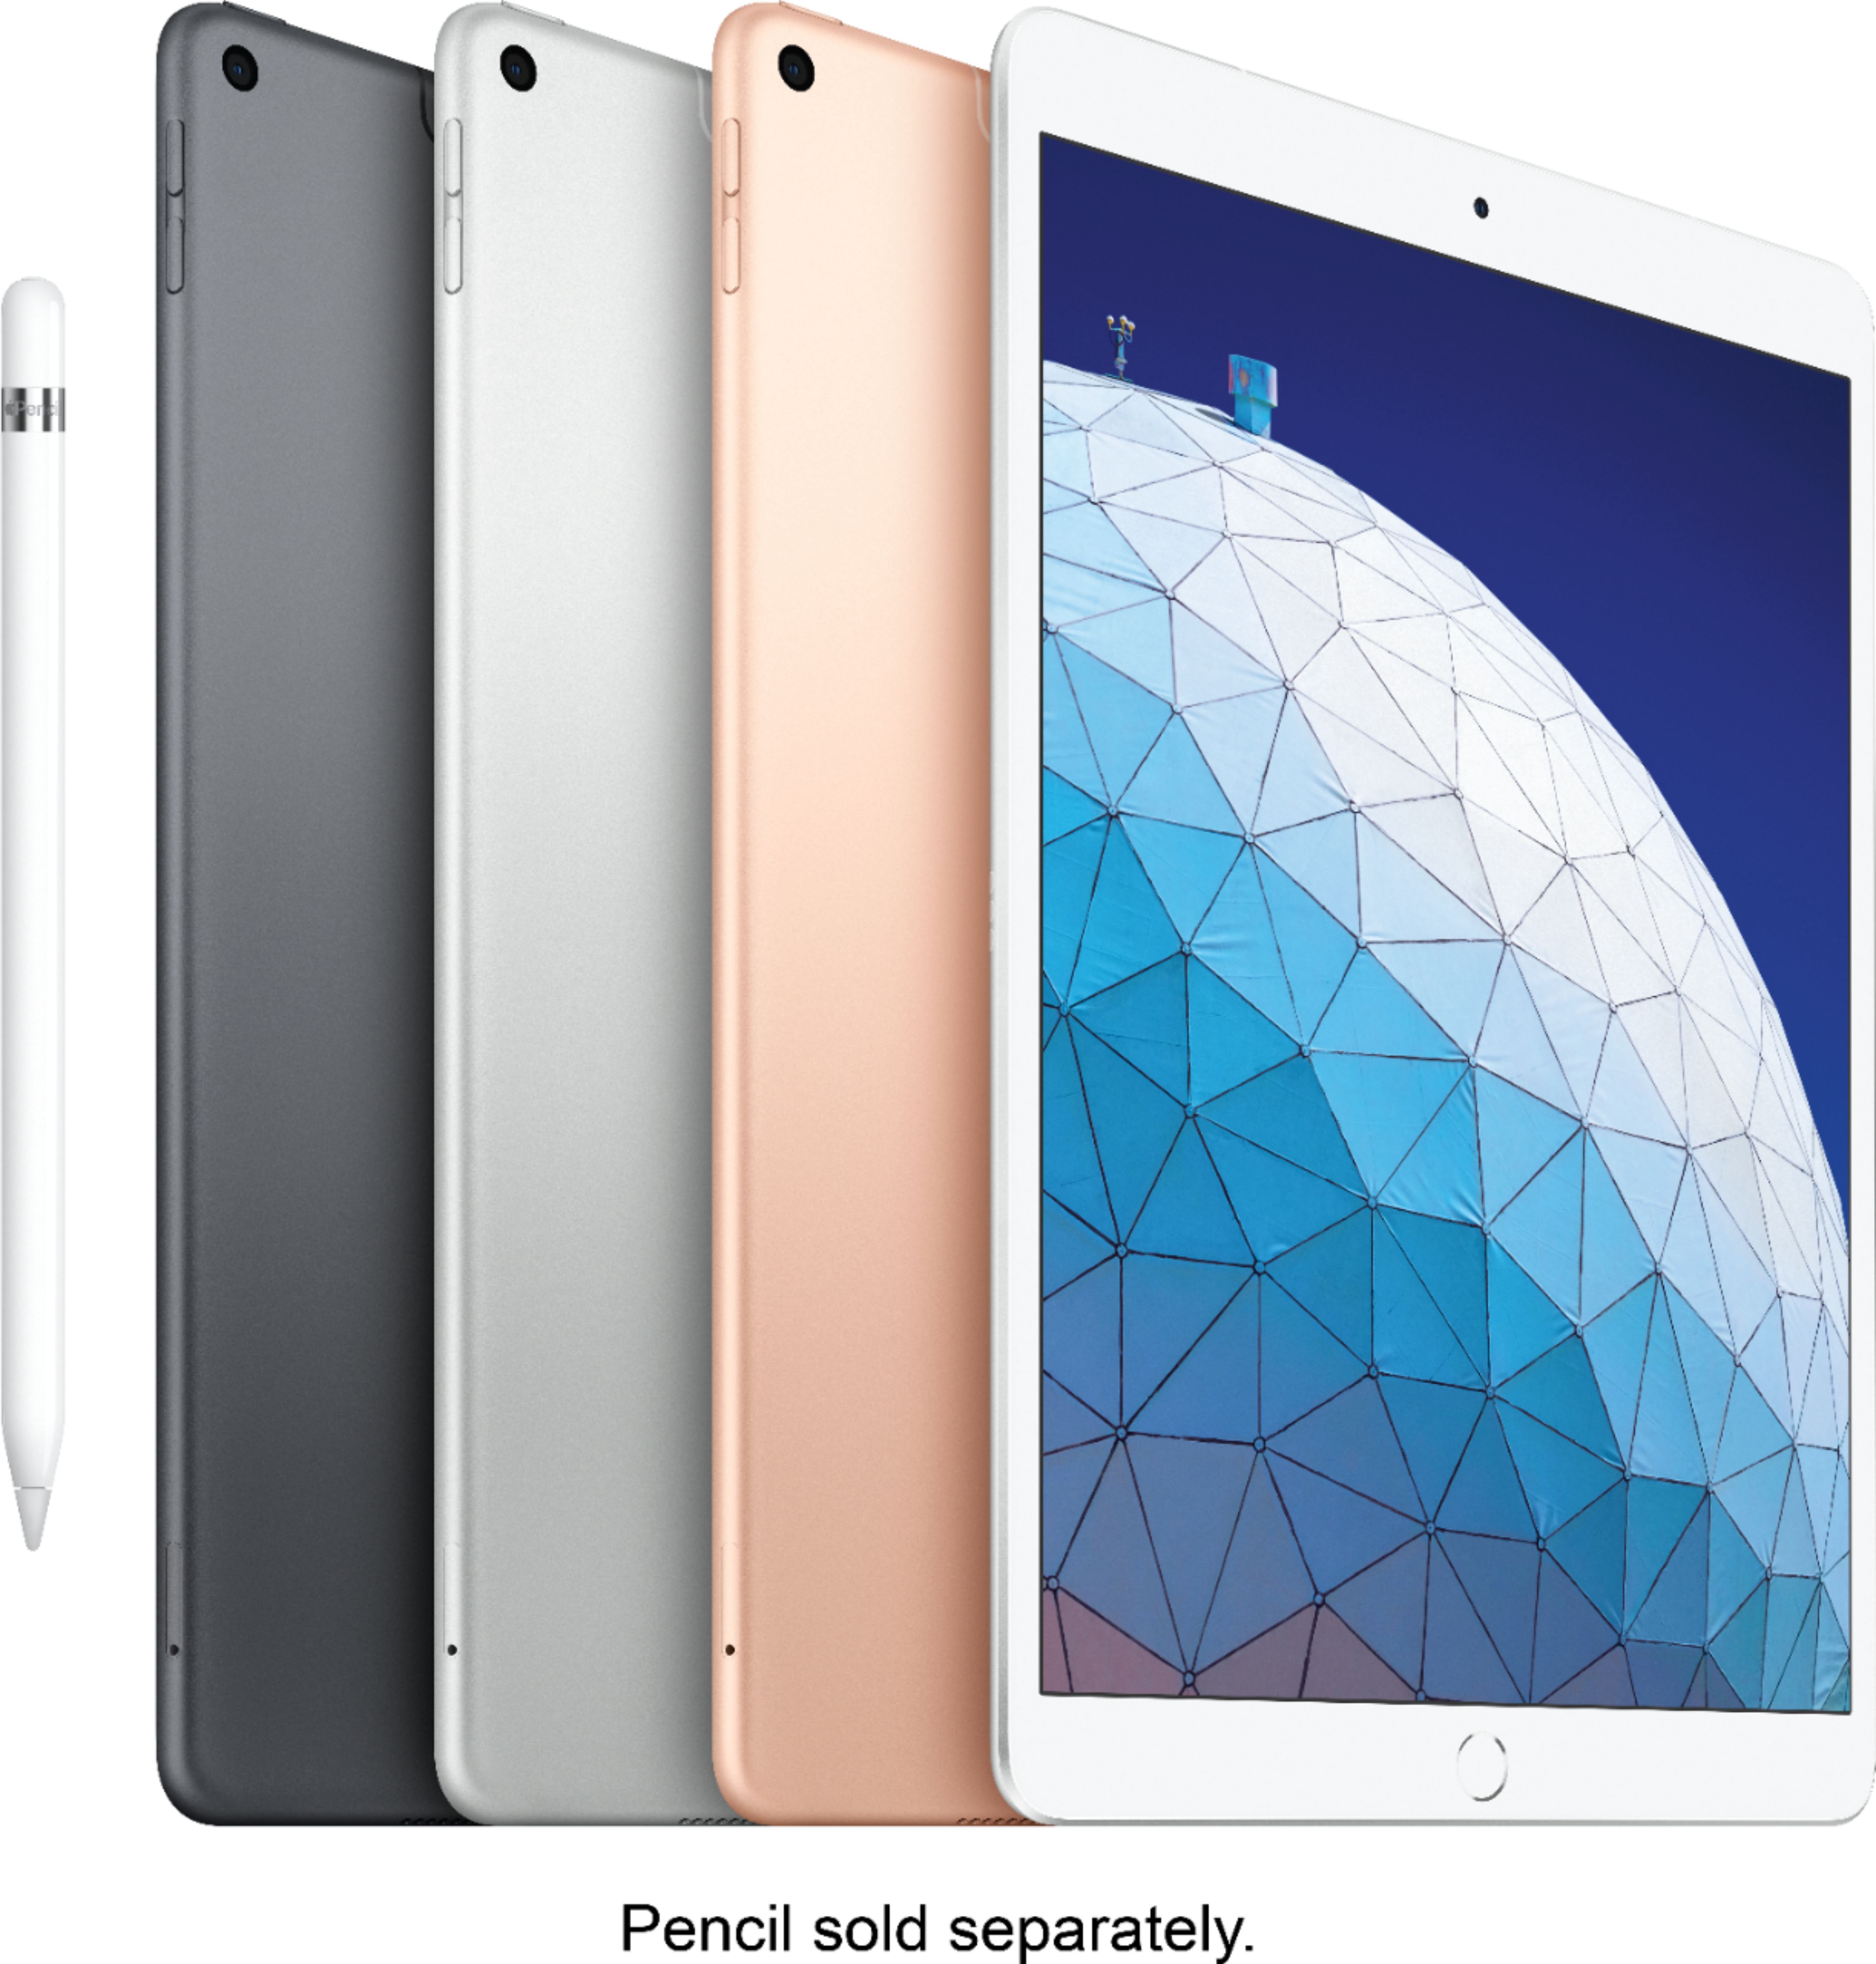 iPad Air reacondicionado de 256 GB con Wi-Fi + Cellular - Gris